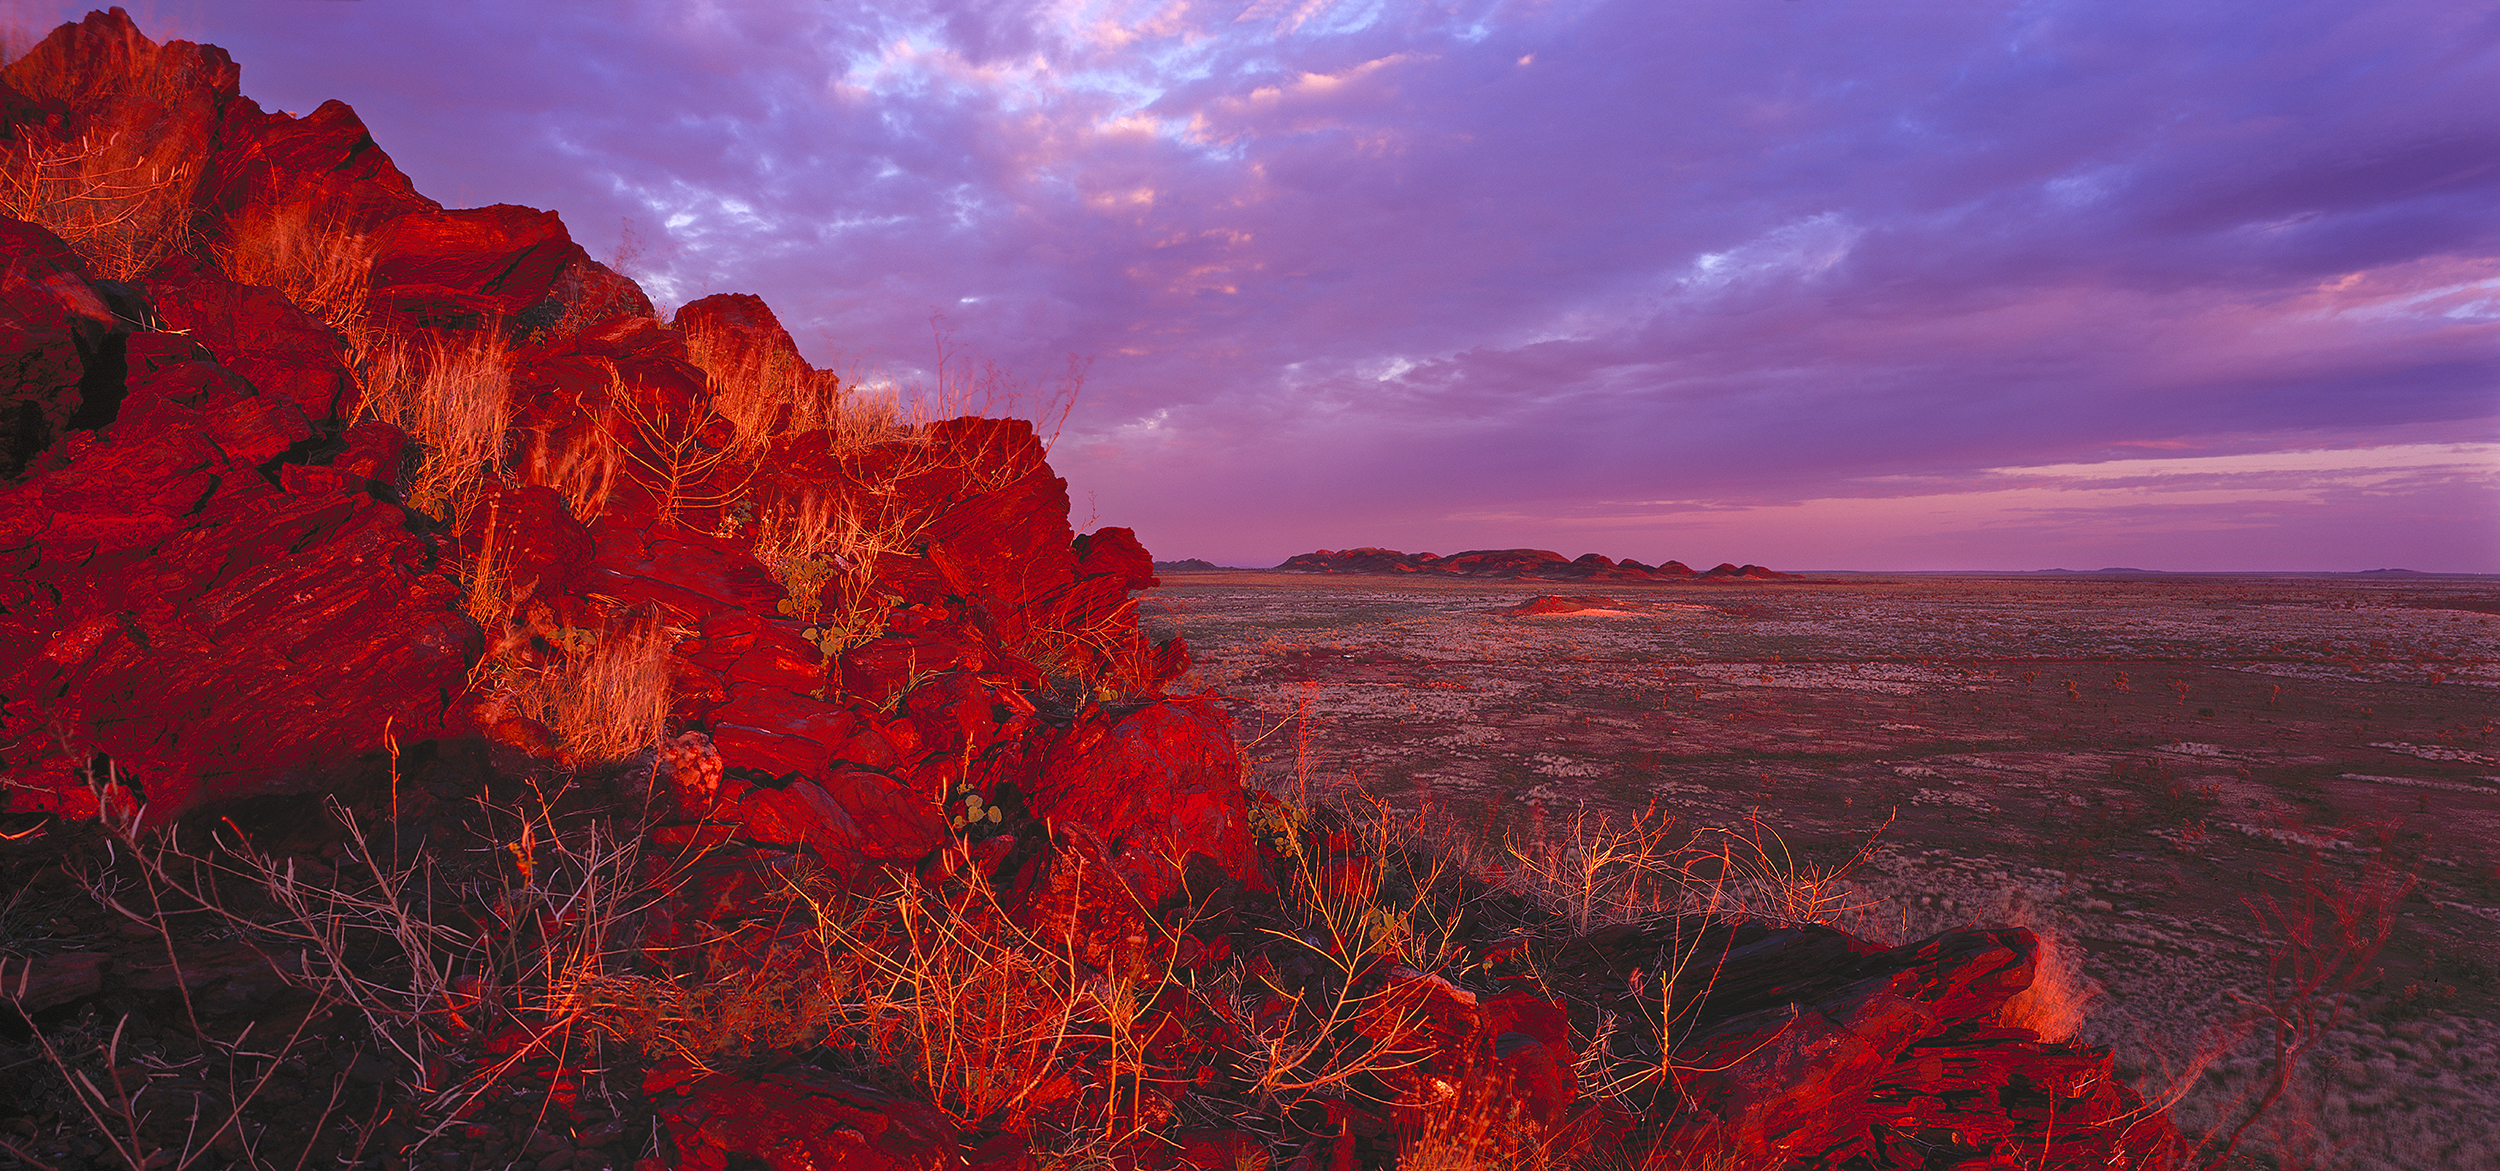  Sunrise near Yandeyarra, Pilbara, Western Australia, 2014.&nbsp; Edition of 3. 